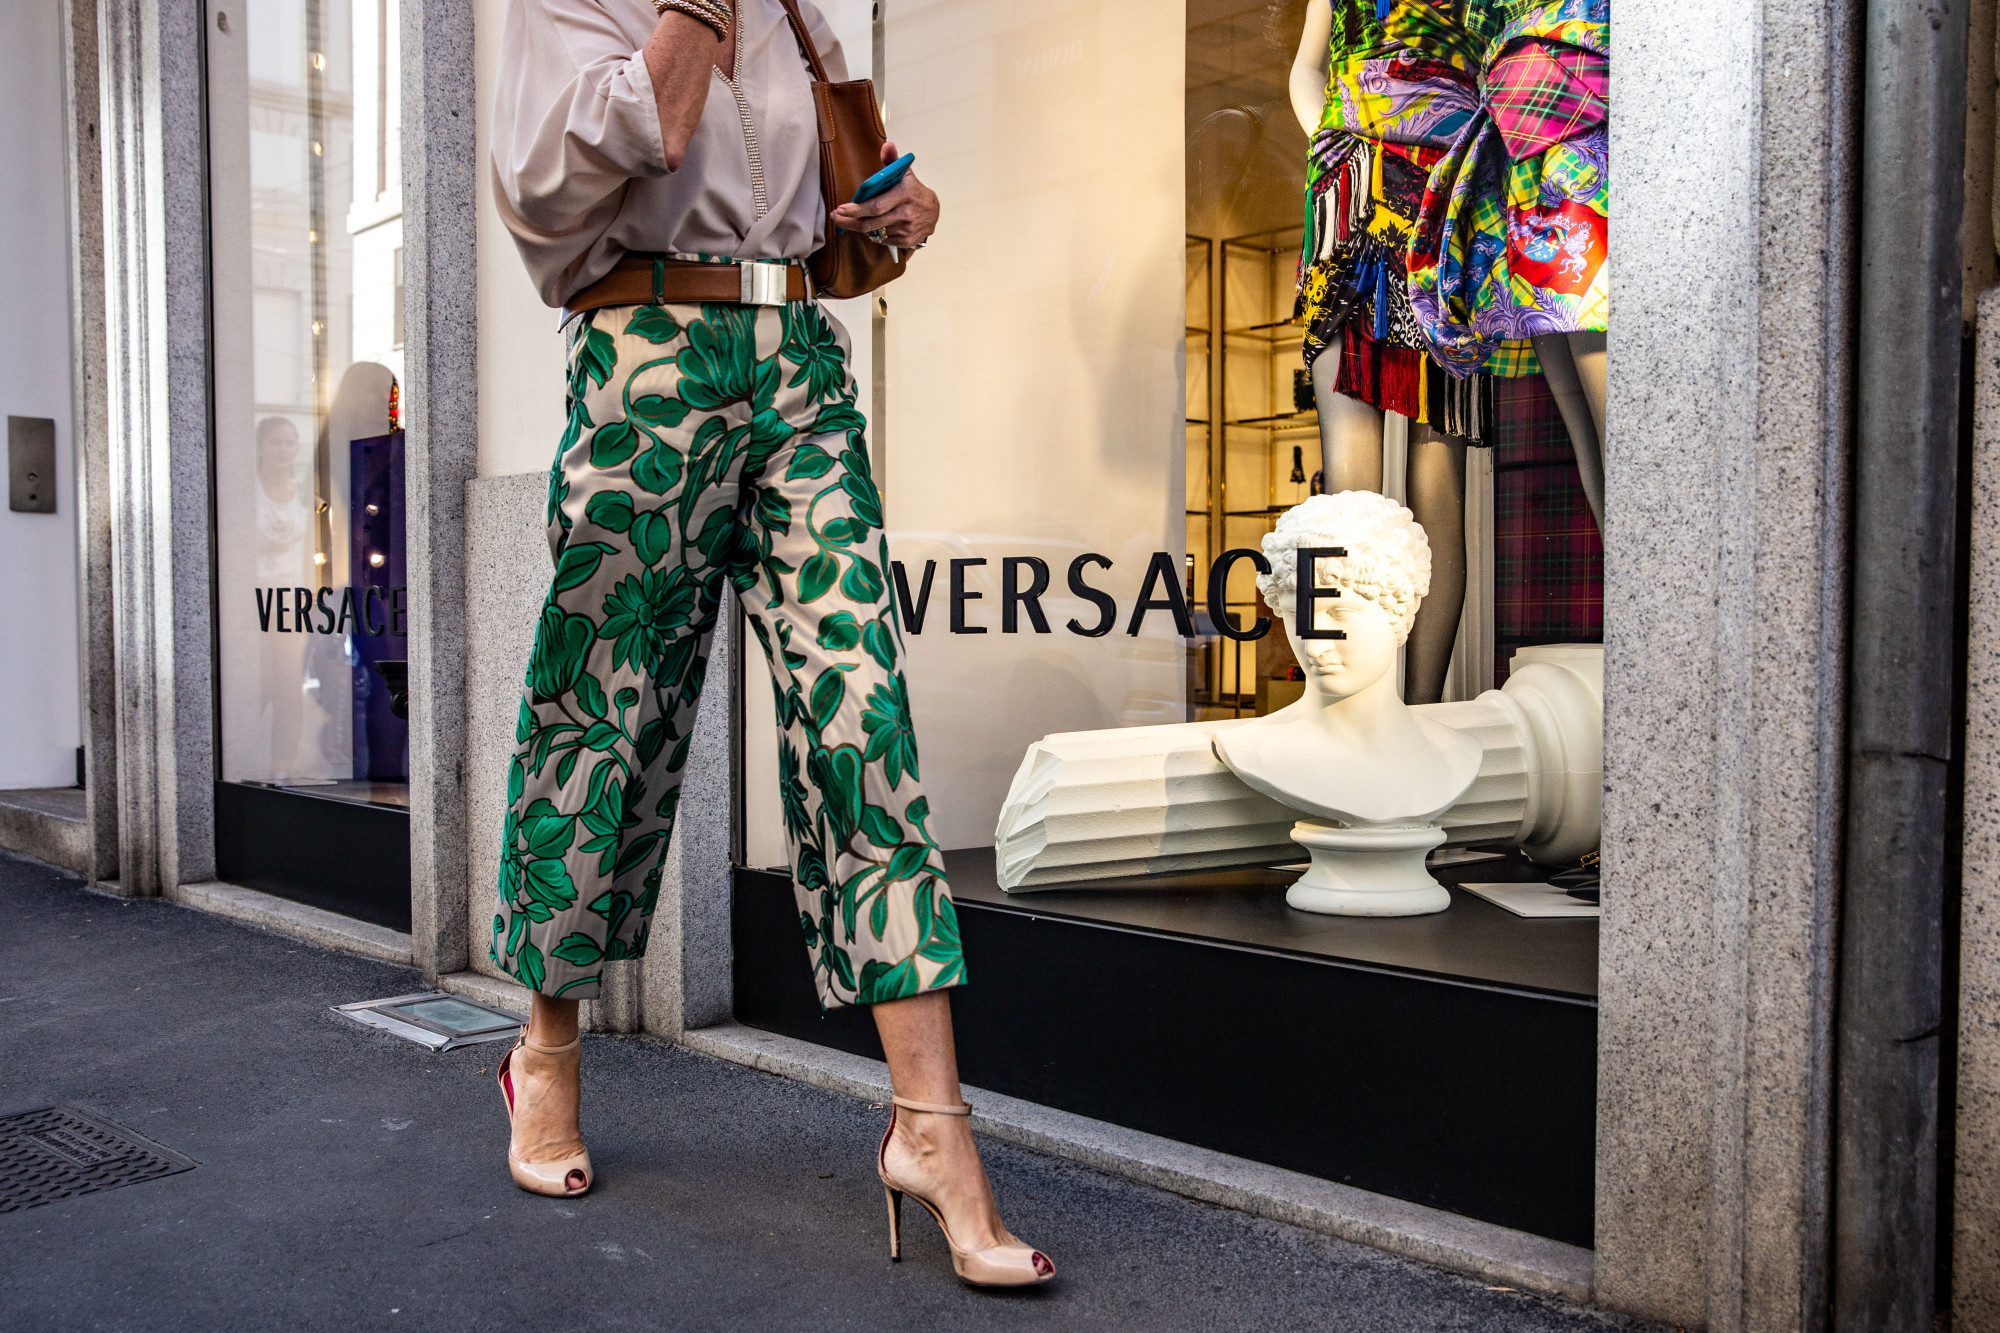 A pedestrian passes a Versace store in Milan.